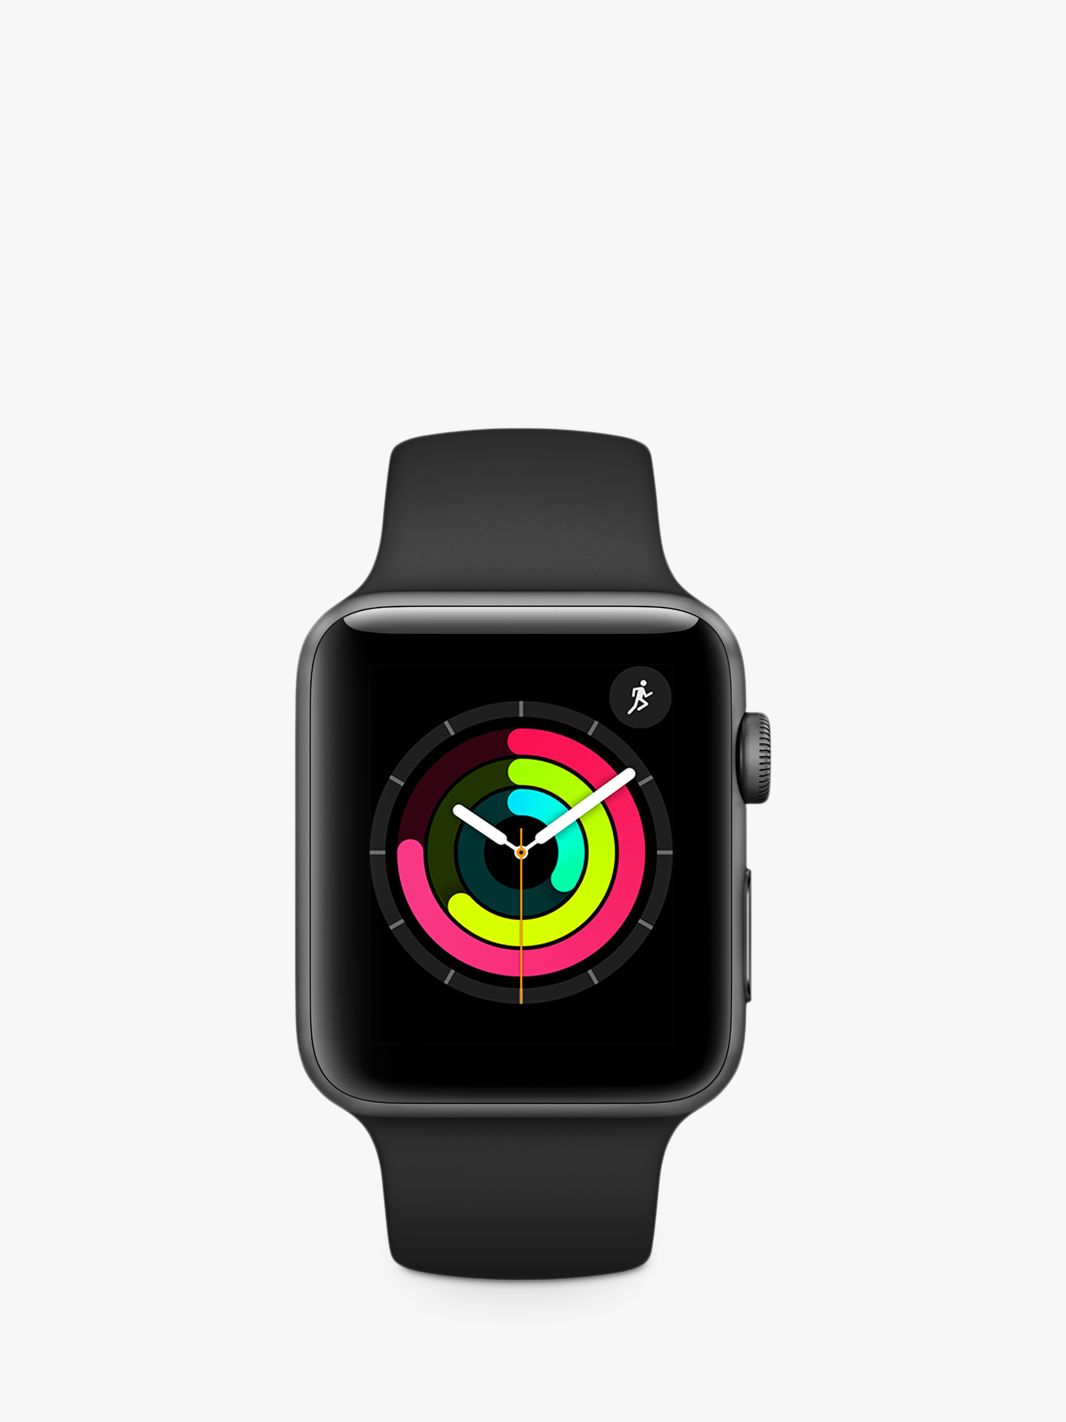 apple watch series 3 grey 42mm